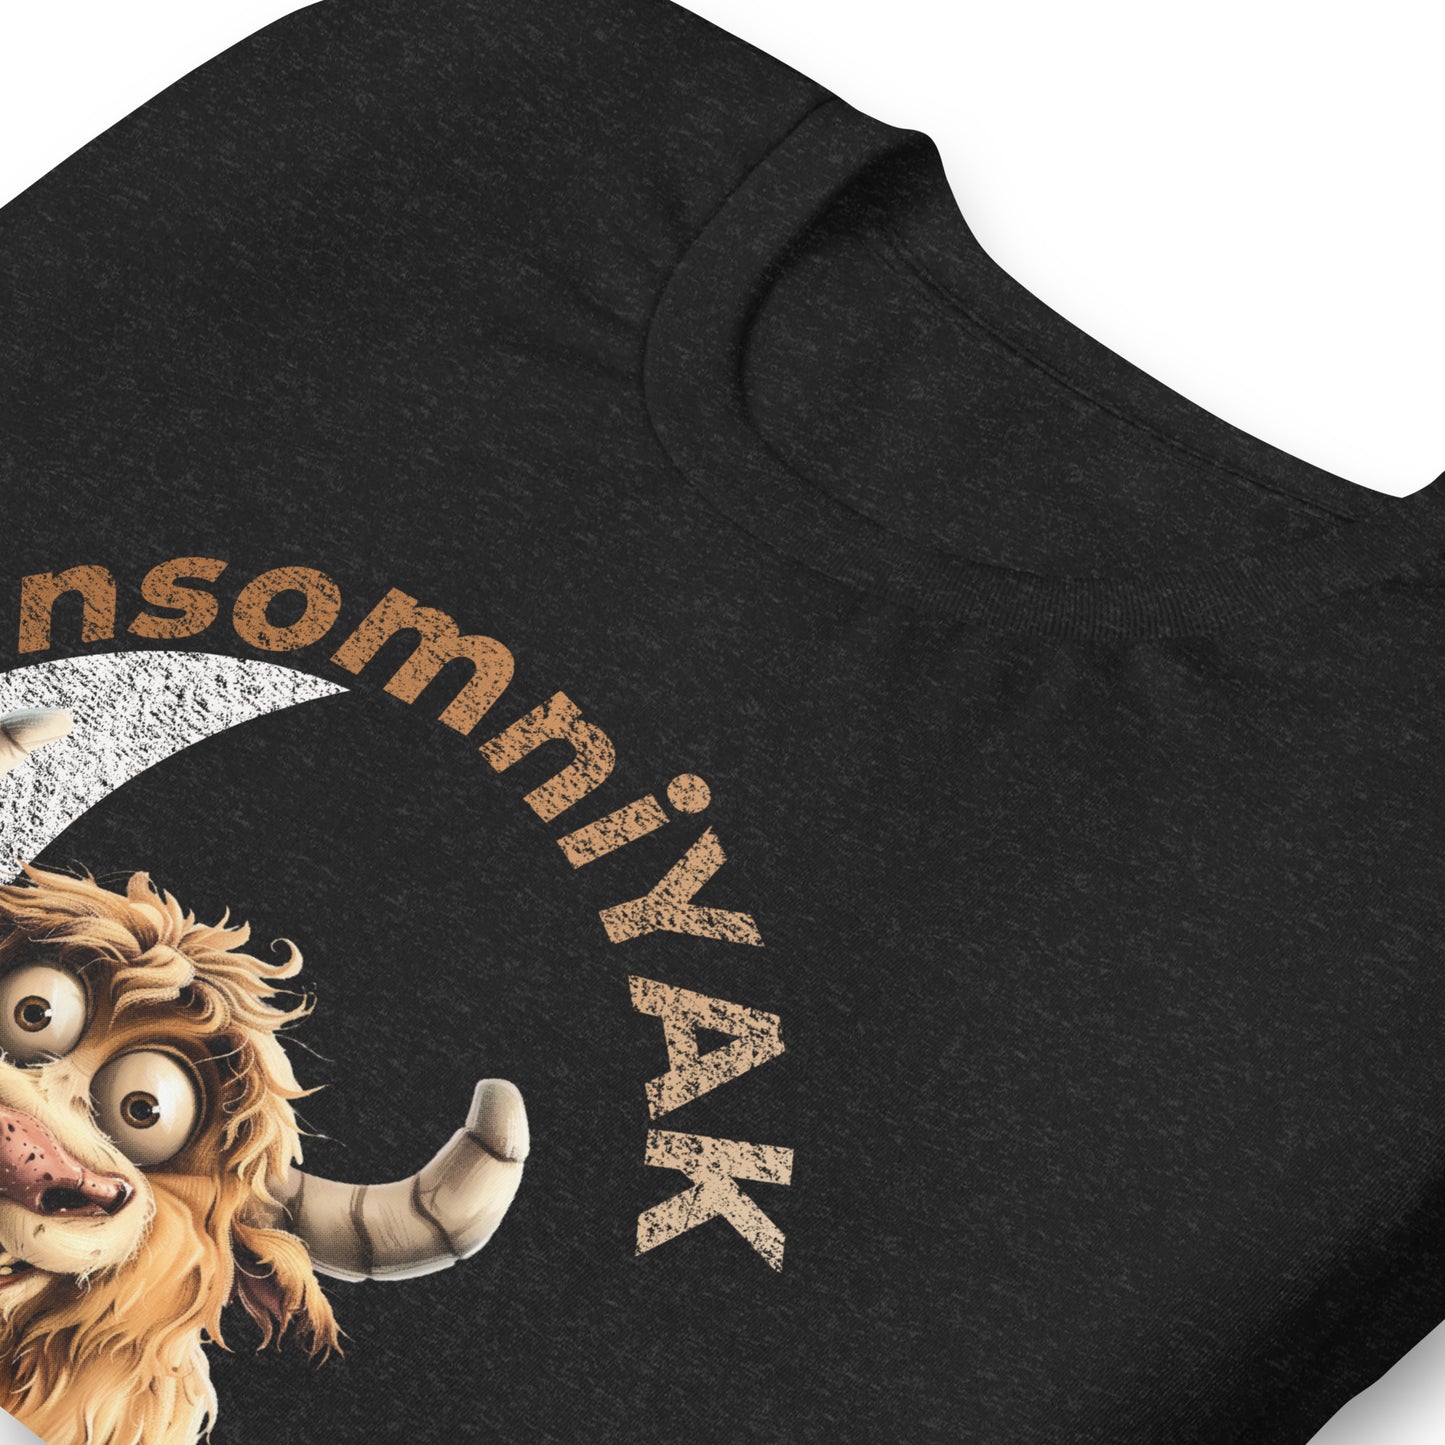 InsomniYAK, Insomniac Yak, Insomnia, Animals, Sleep Disorders, Graphic Tee Shirt, Black